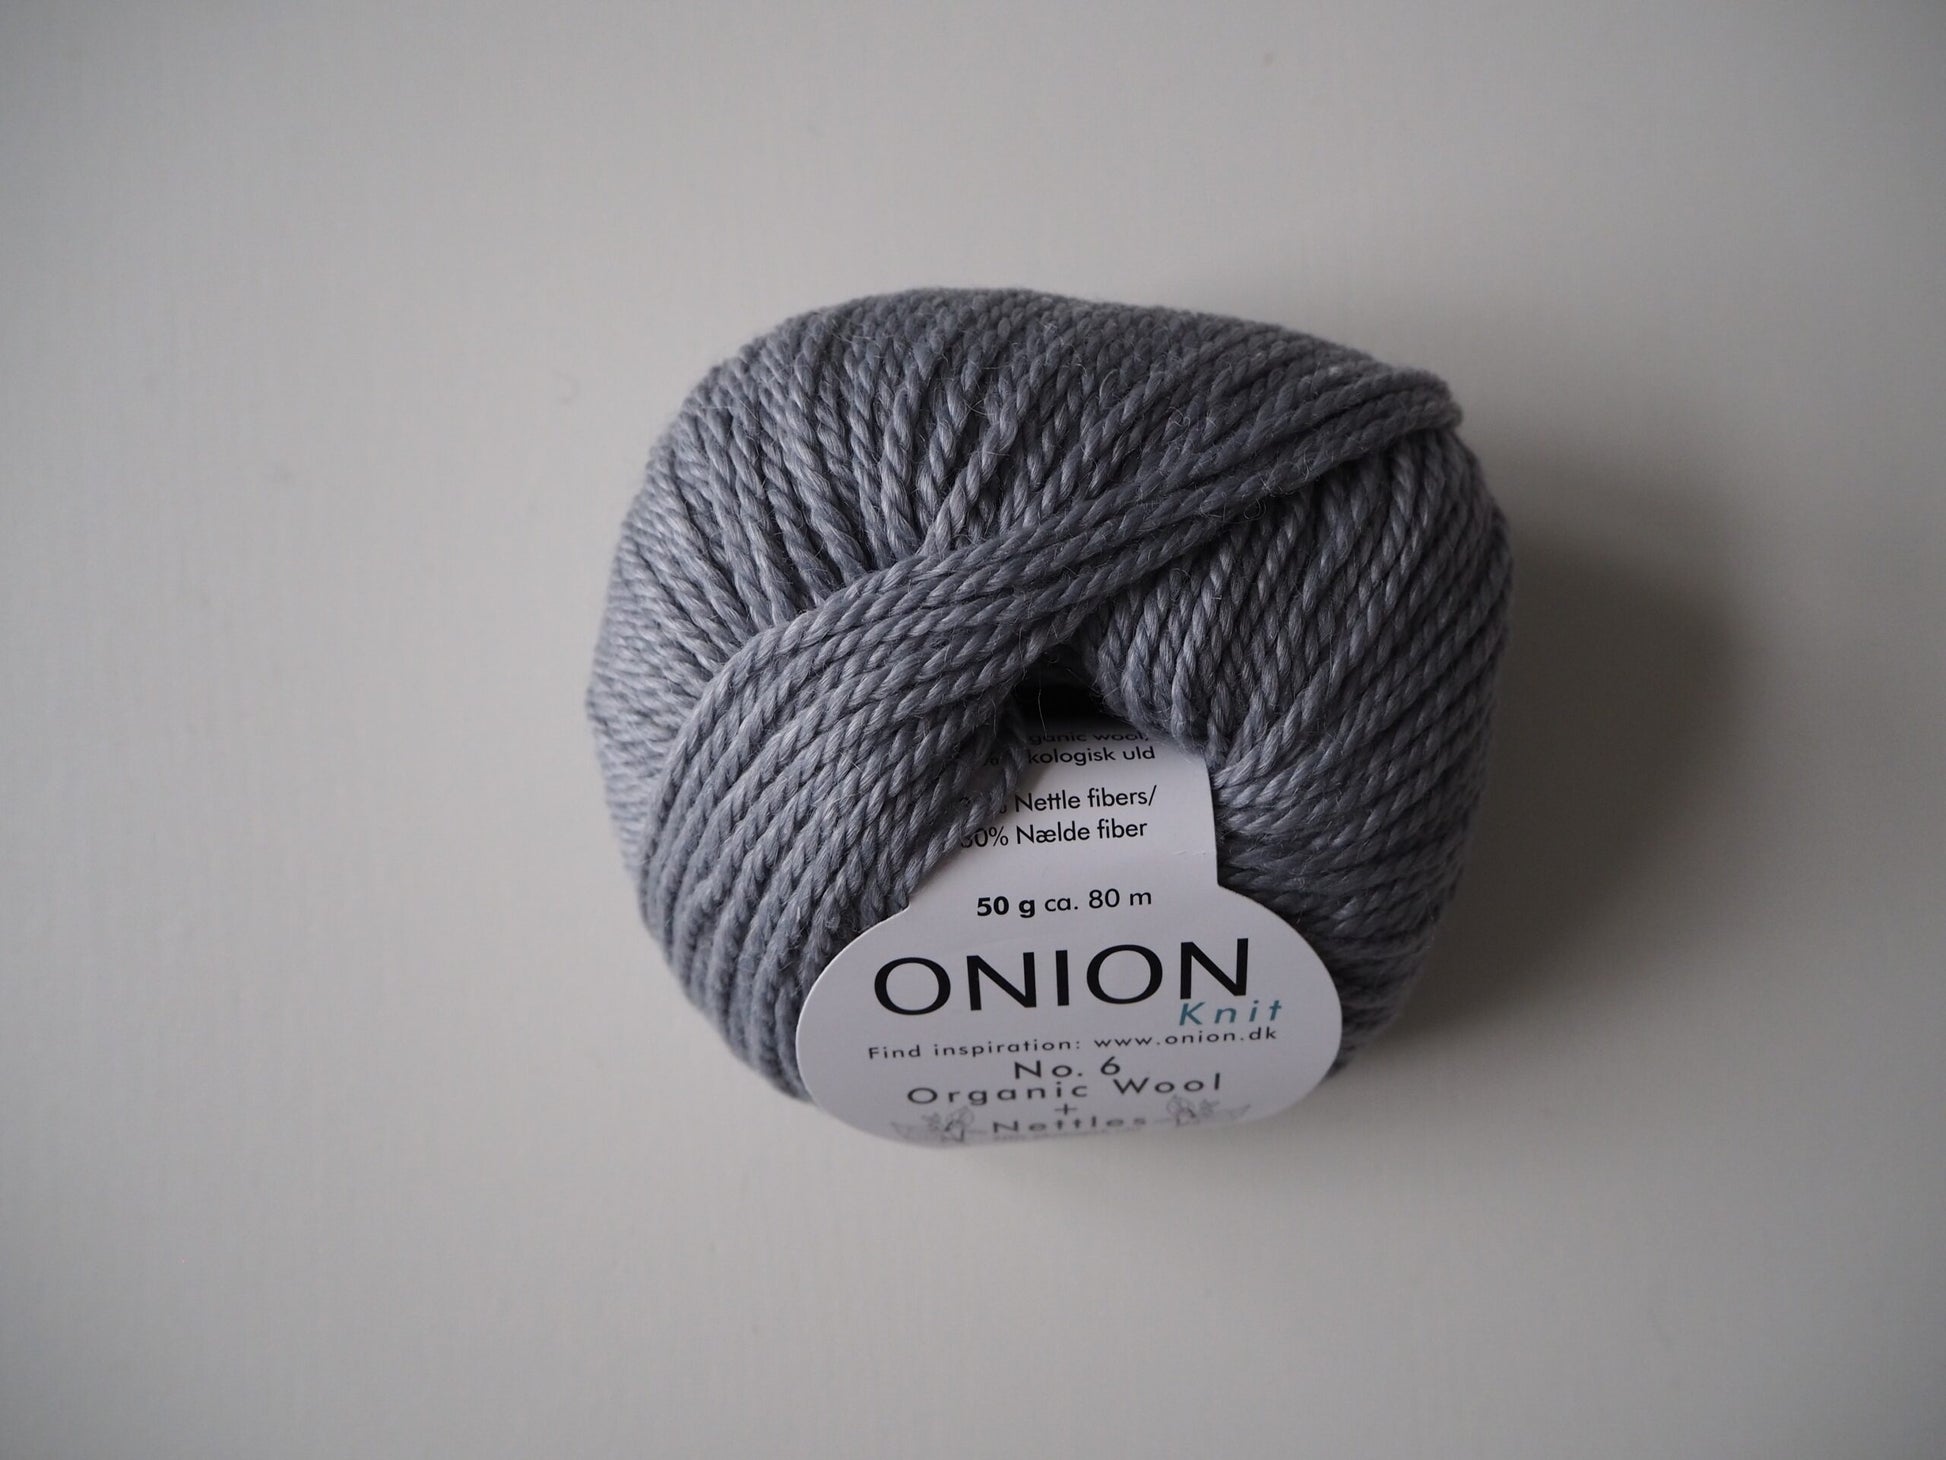 Onion No. 6 Organic Wool + Nettles 605 Grå